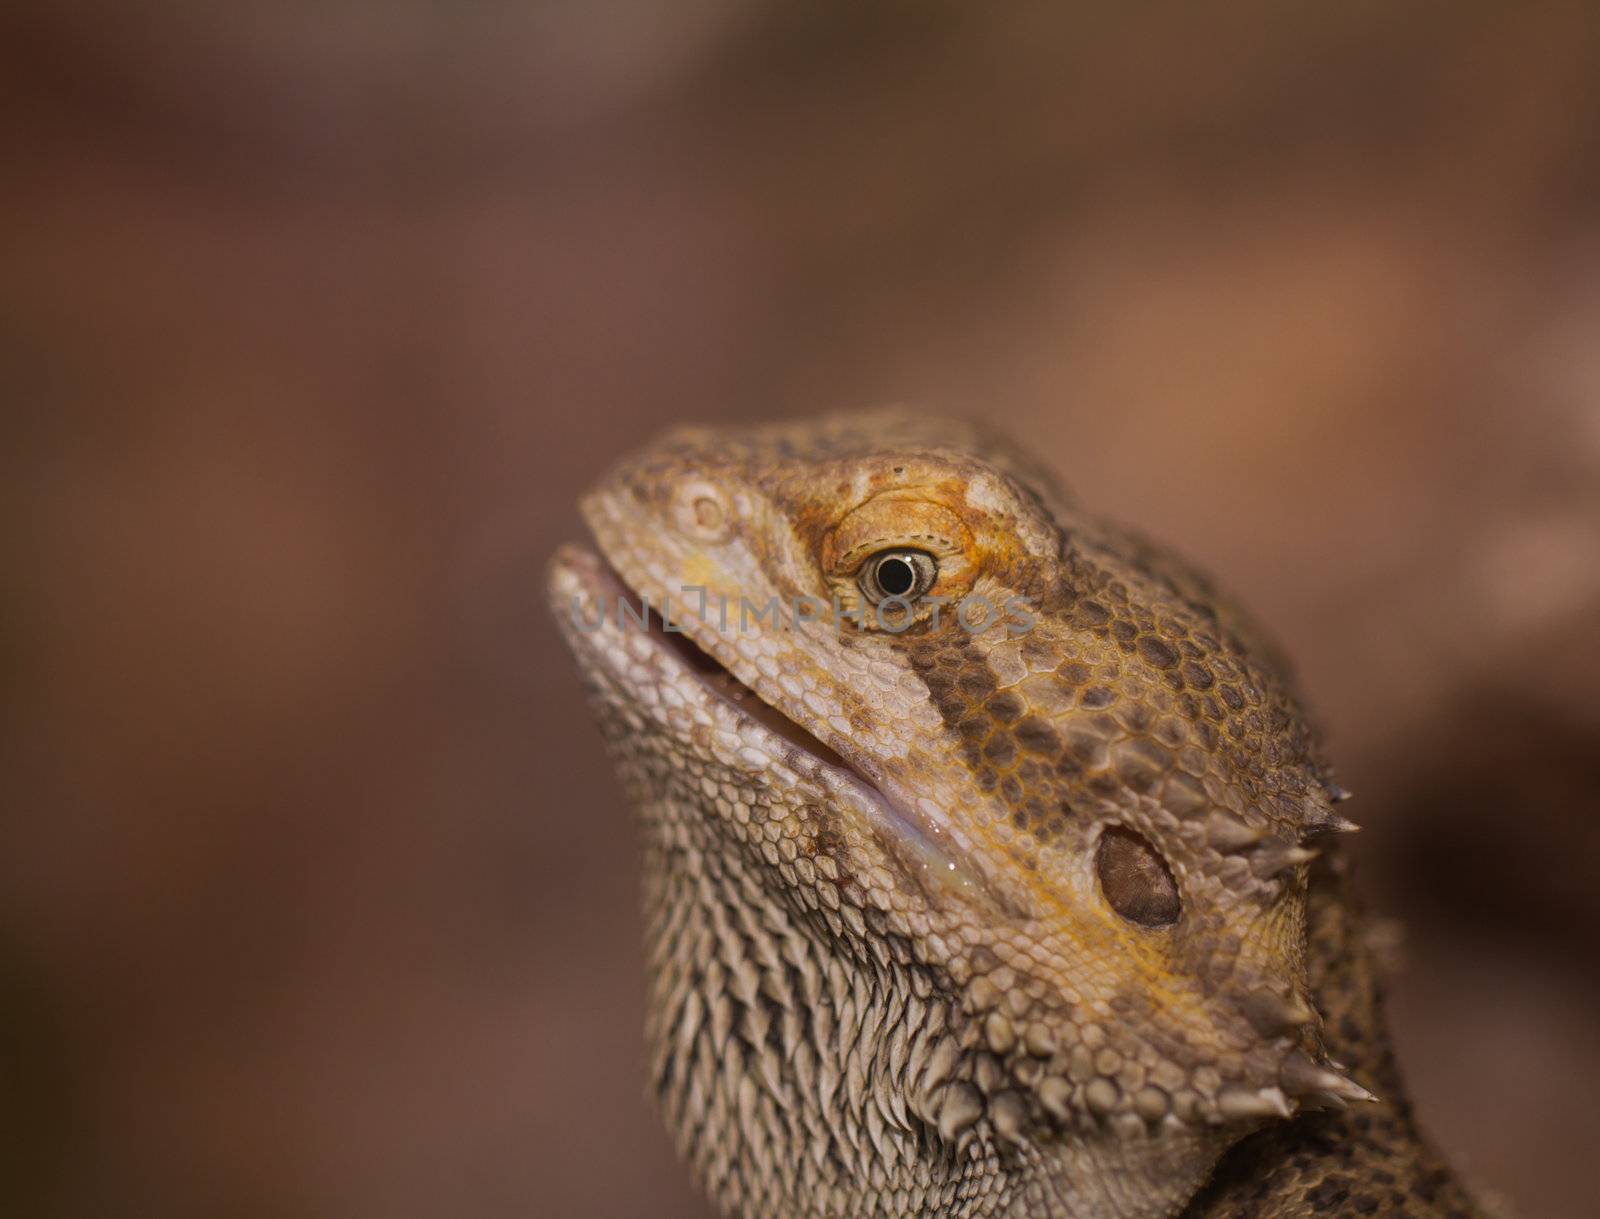 Close-up of Bearded dragons eye (Pogona vitticeps)